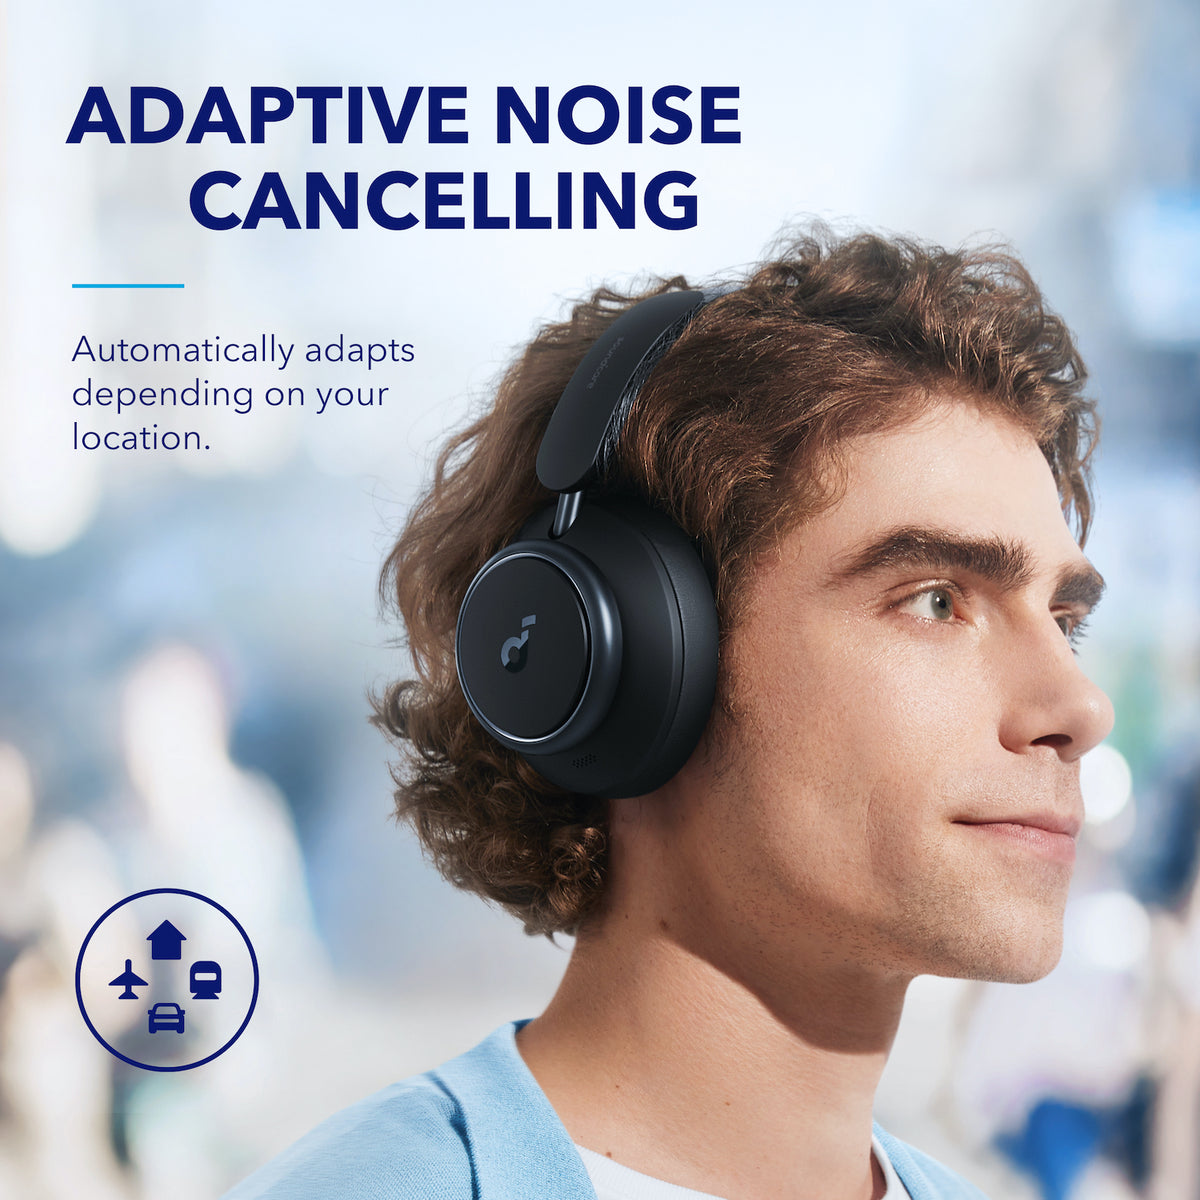 Space Q45 | Long-Lasting Noise Cancelling Headphones